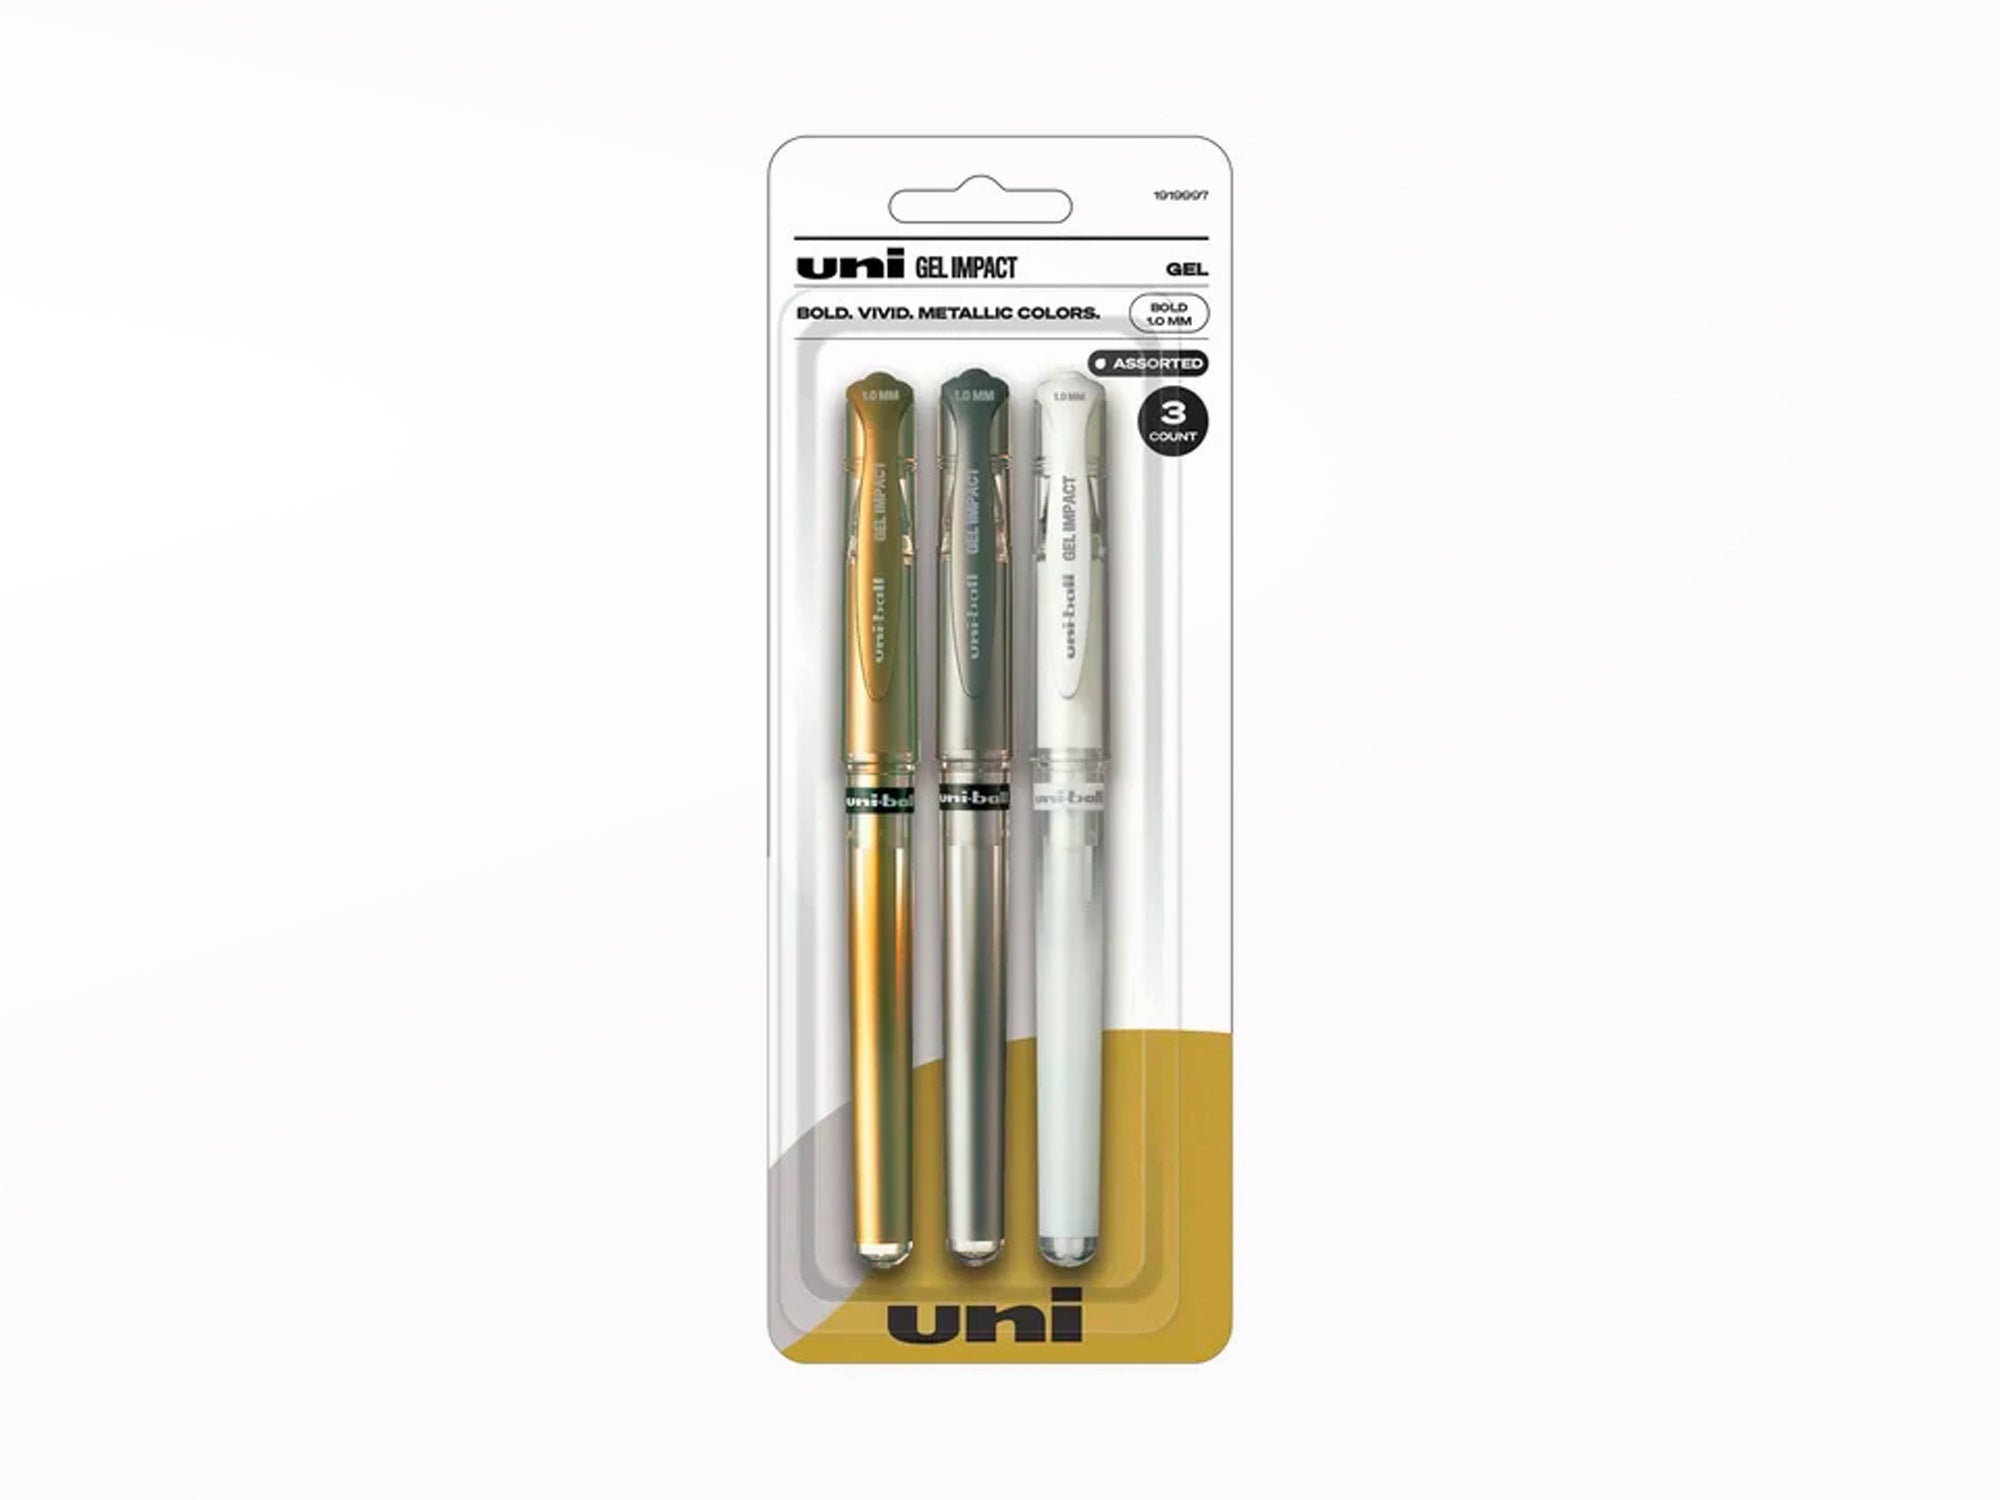  Faber-Castell Metallic PITT Artist Pens - 3 Colored Metallic  Colors - Smooth Bullet Nibs (Classic Metallic)